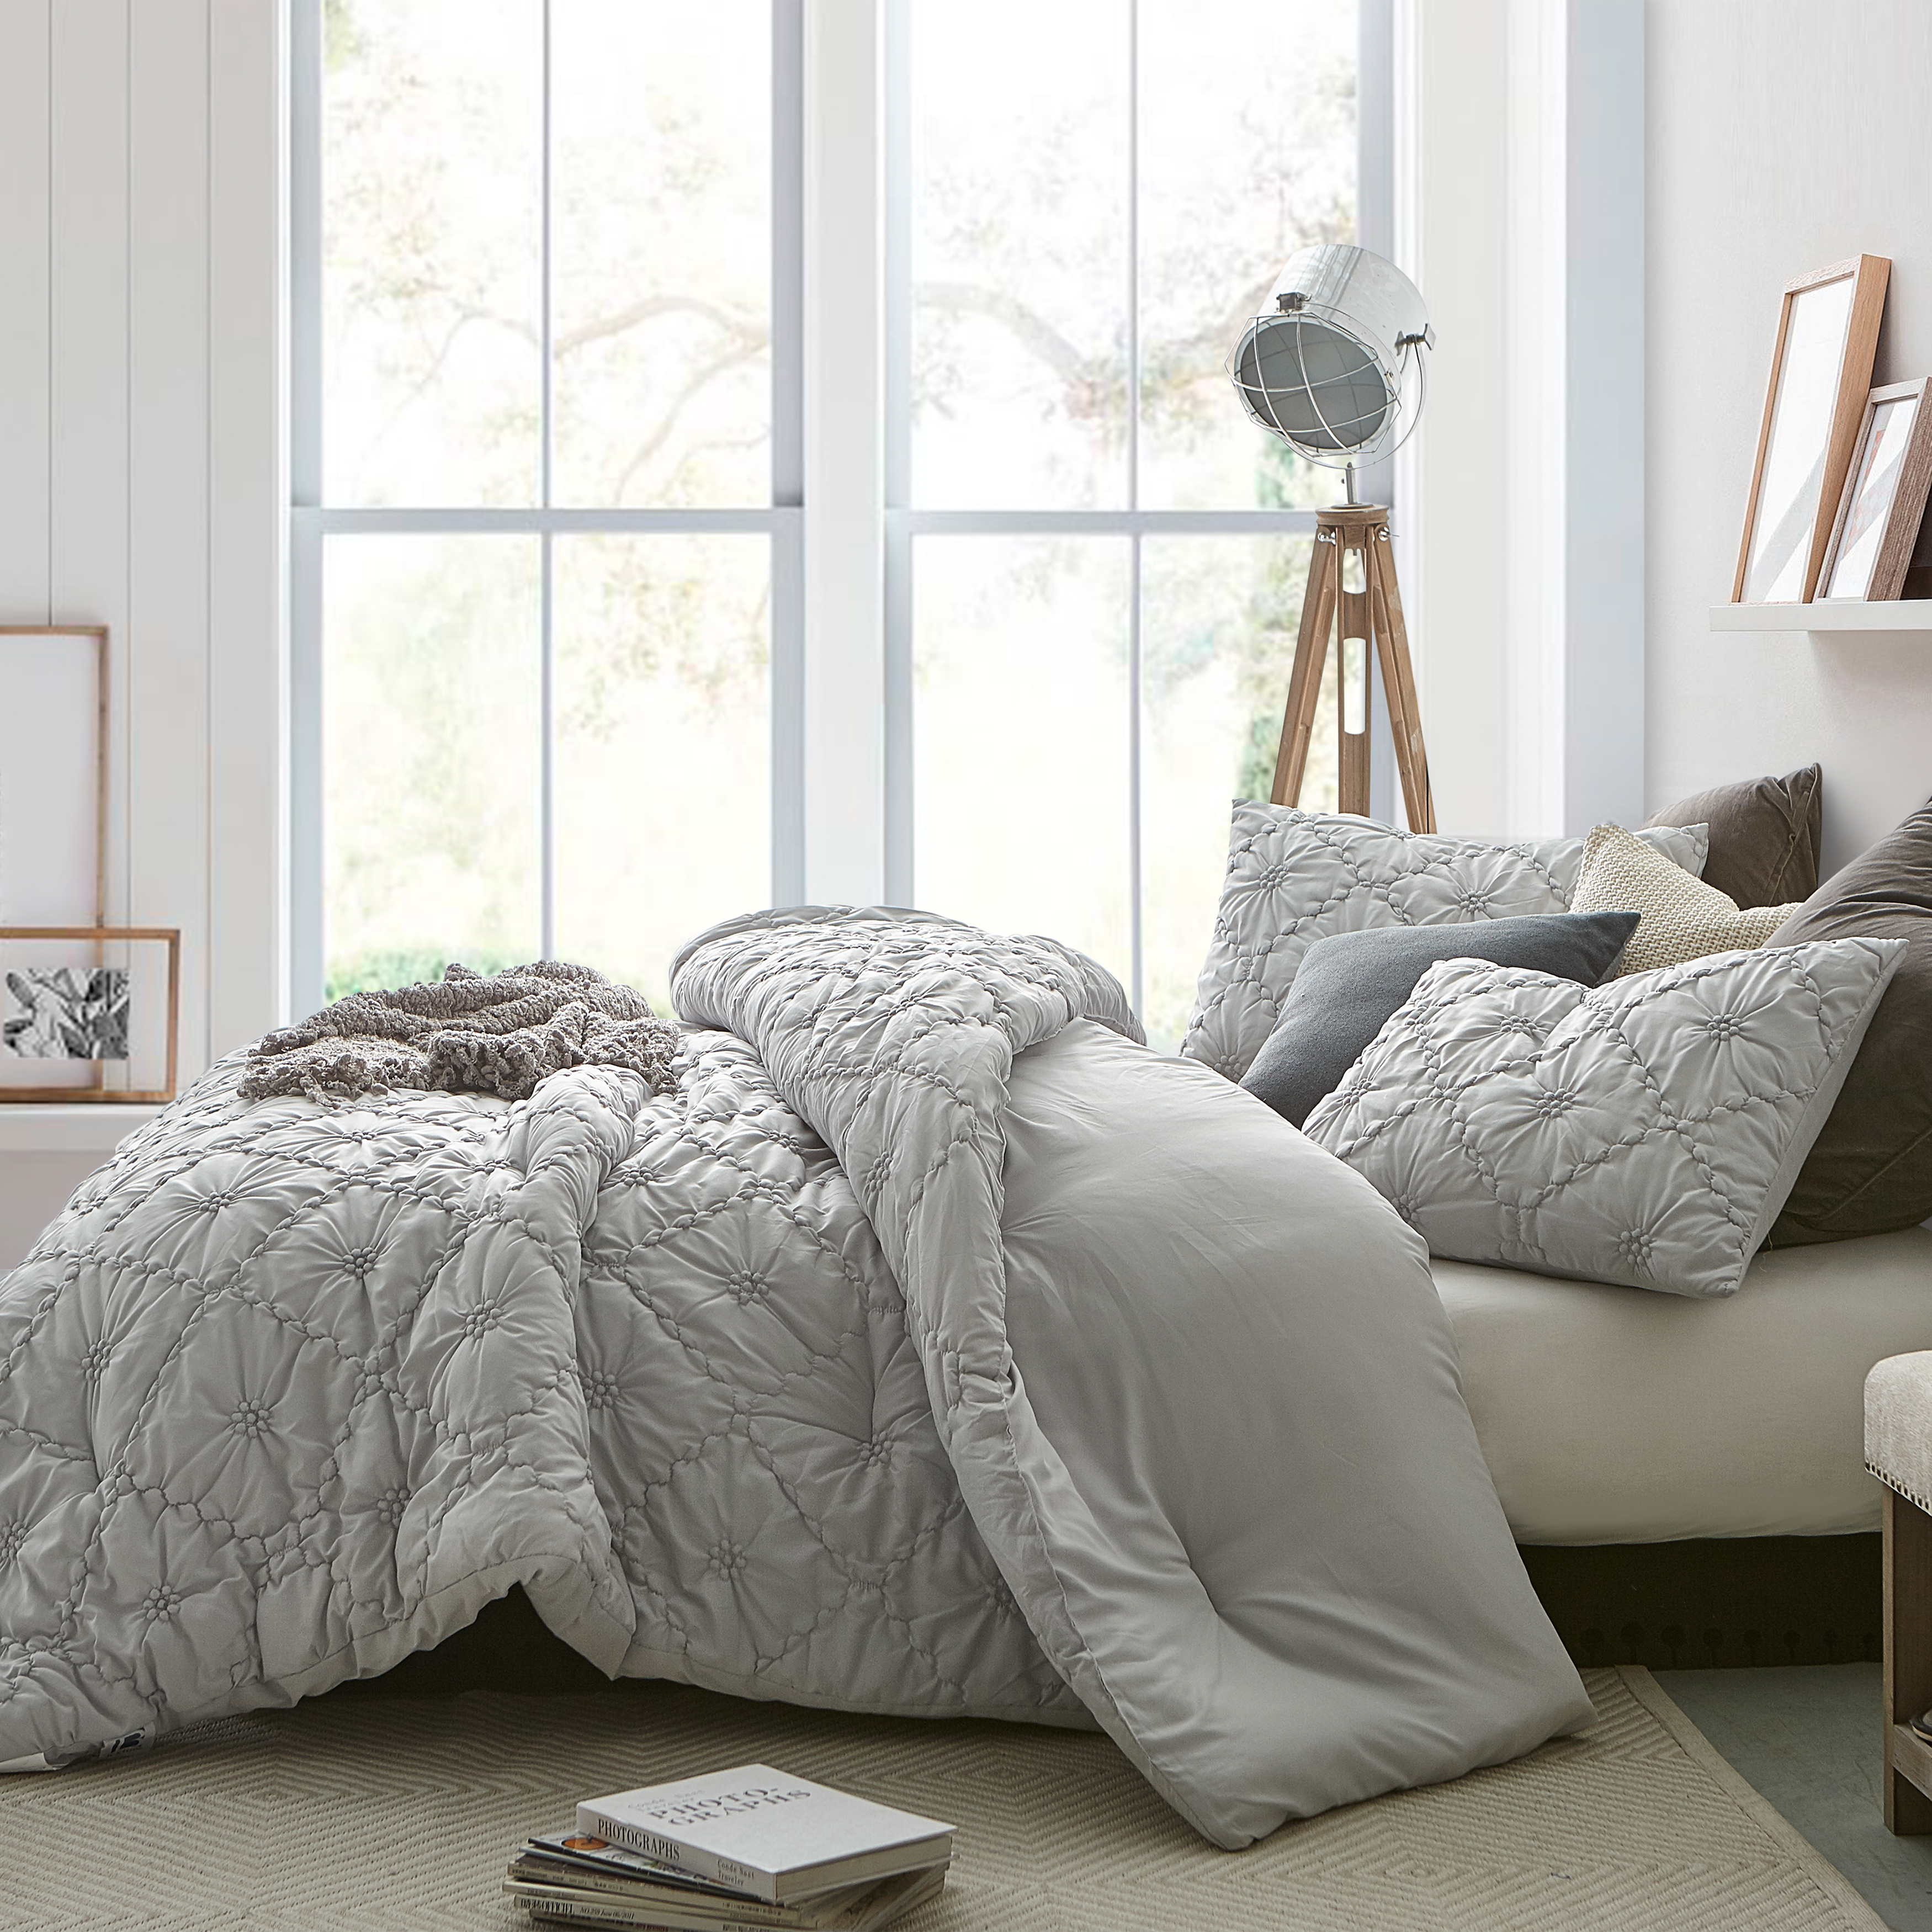 Farmhouse Morning Textured Bedding - Oversized Twin XL Comforter - Glacier Gray